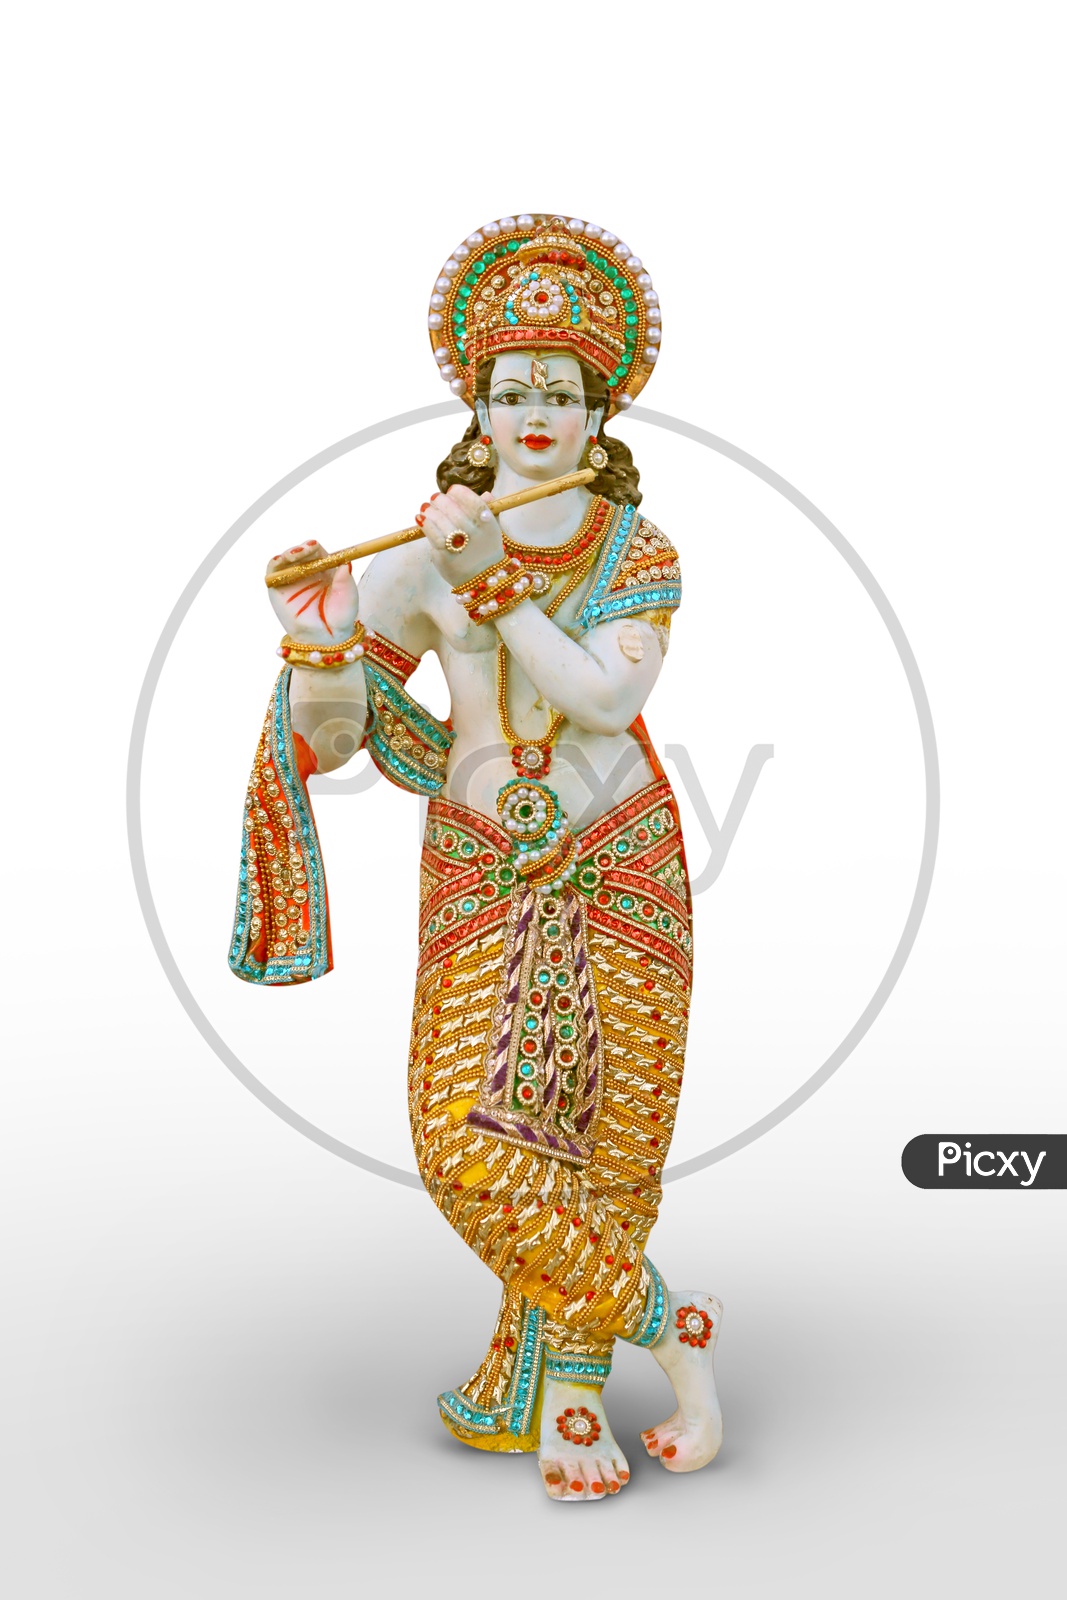 Image of Lord Sri Krishna Idol with white Background-YW055679-Picxy